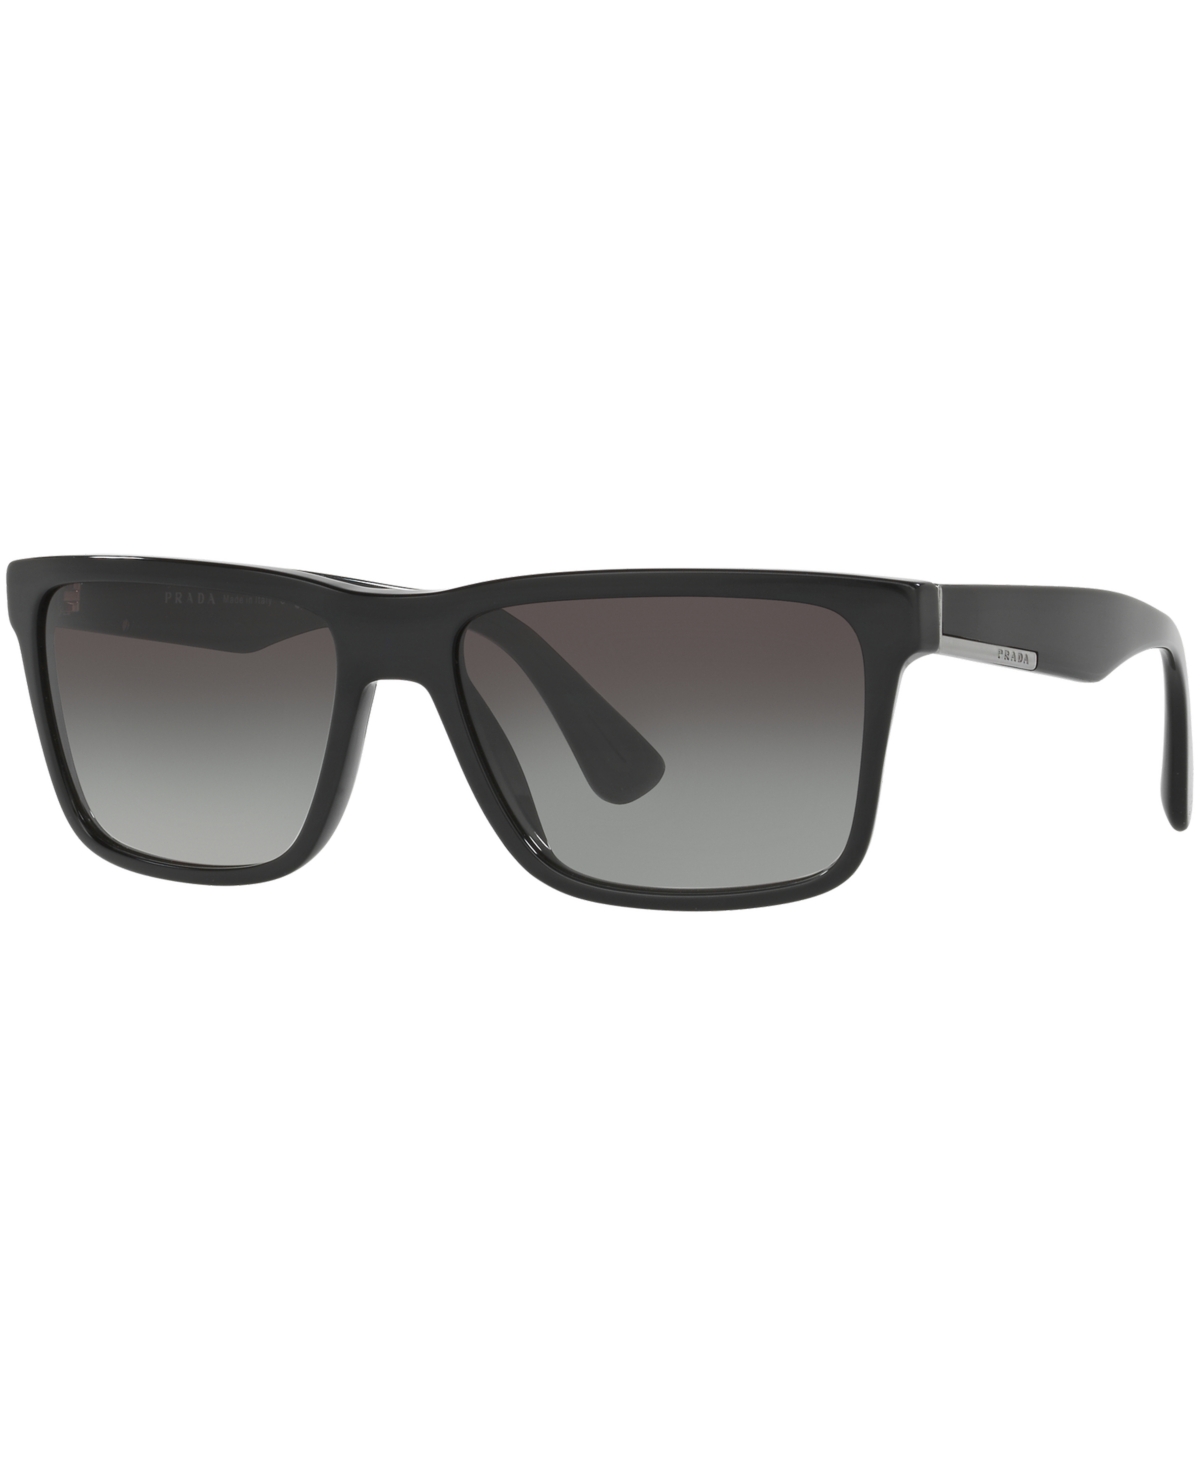 Prada Sunglasses, Pr 19ss In Black,grey Gradient